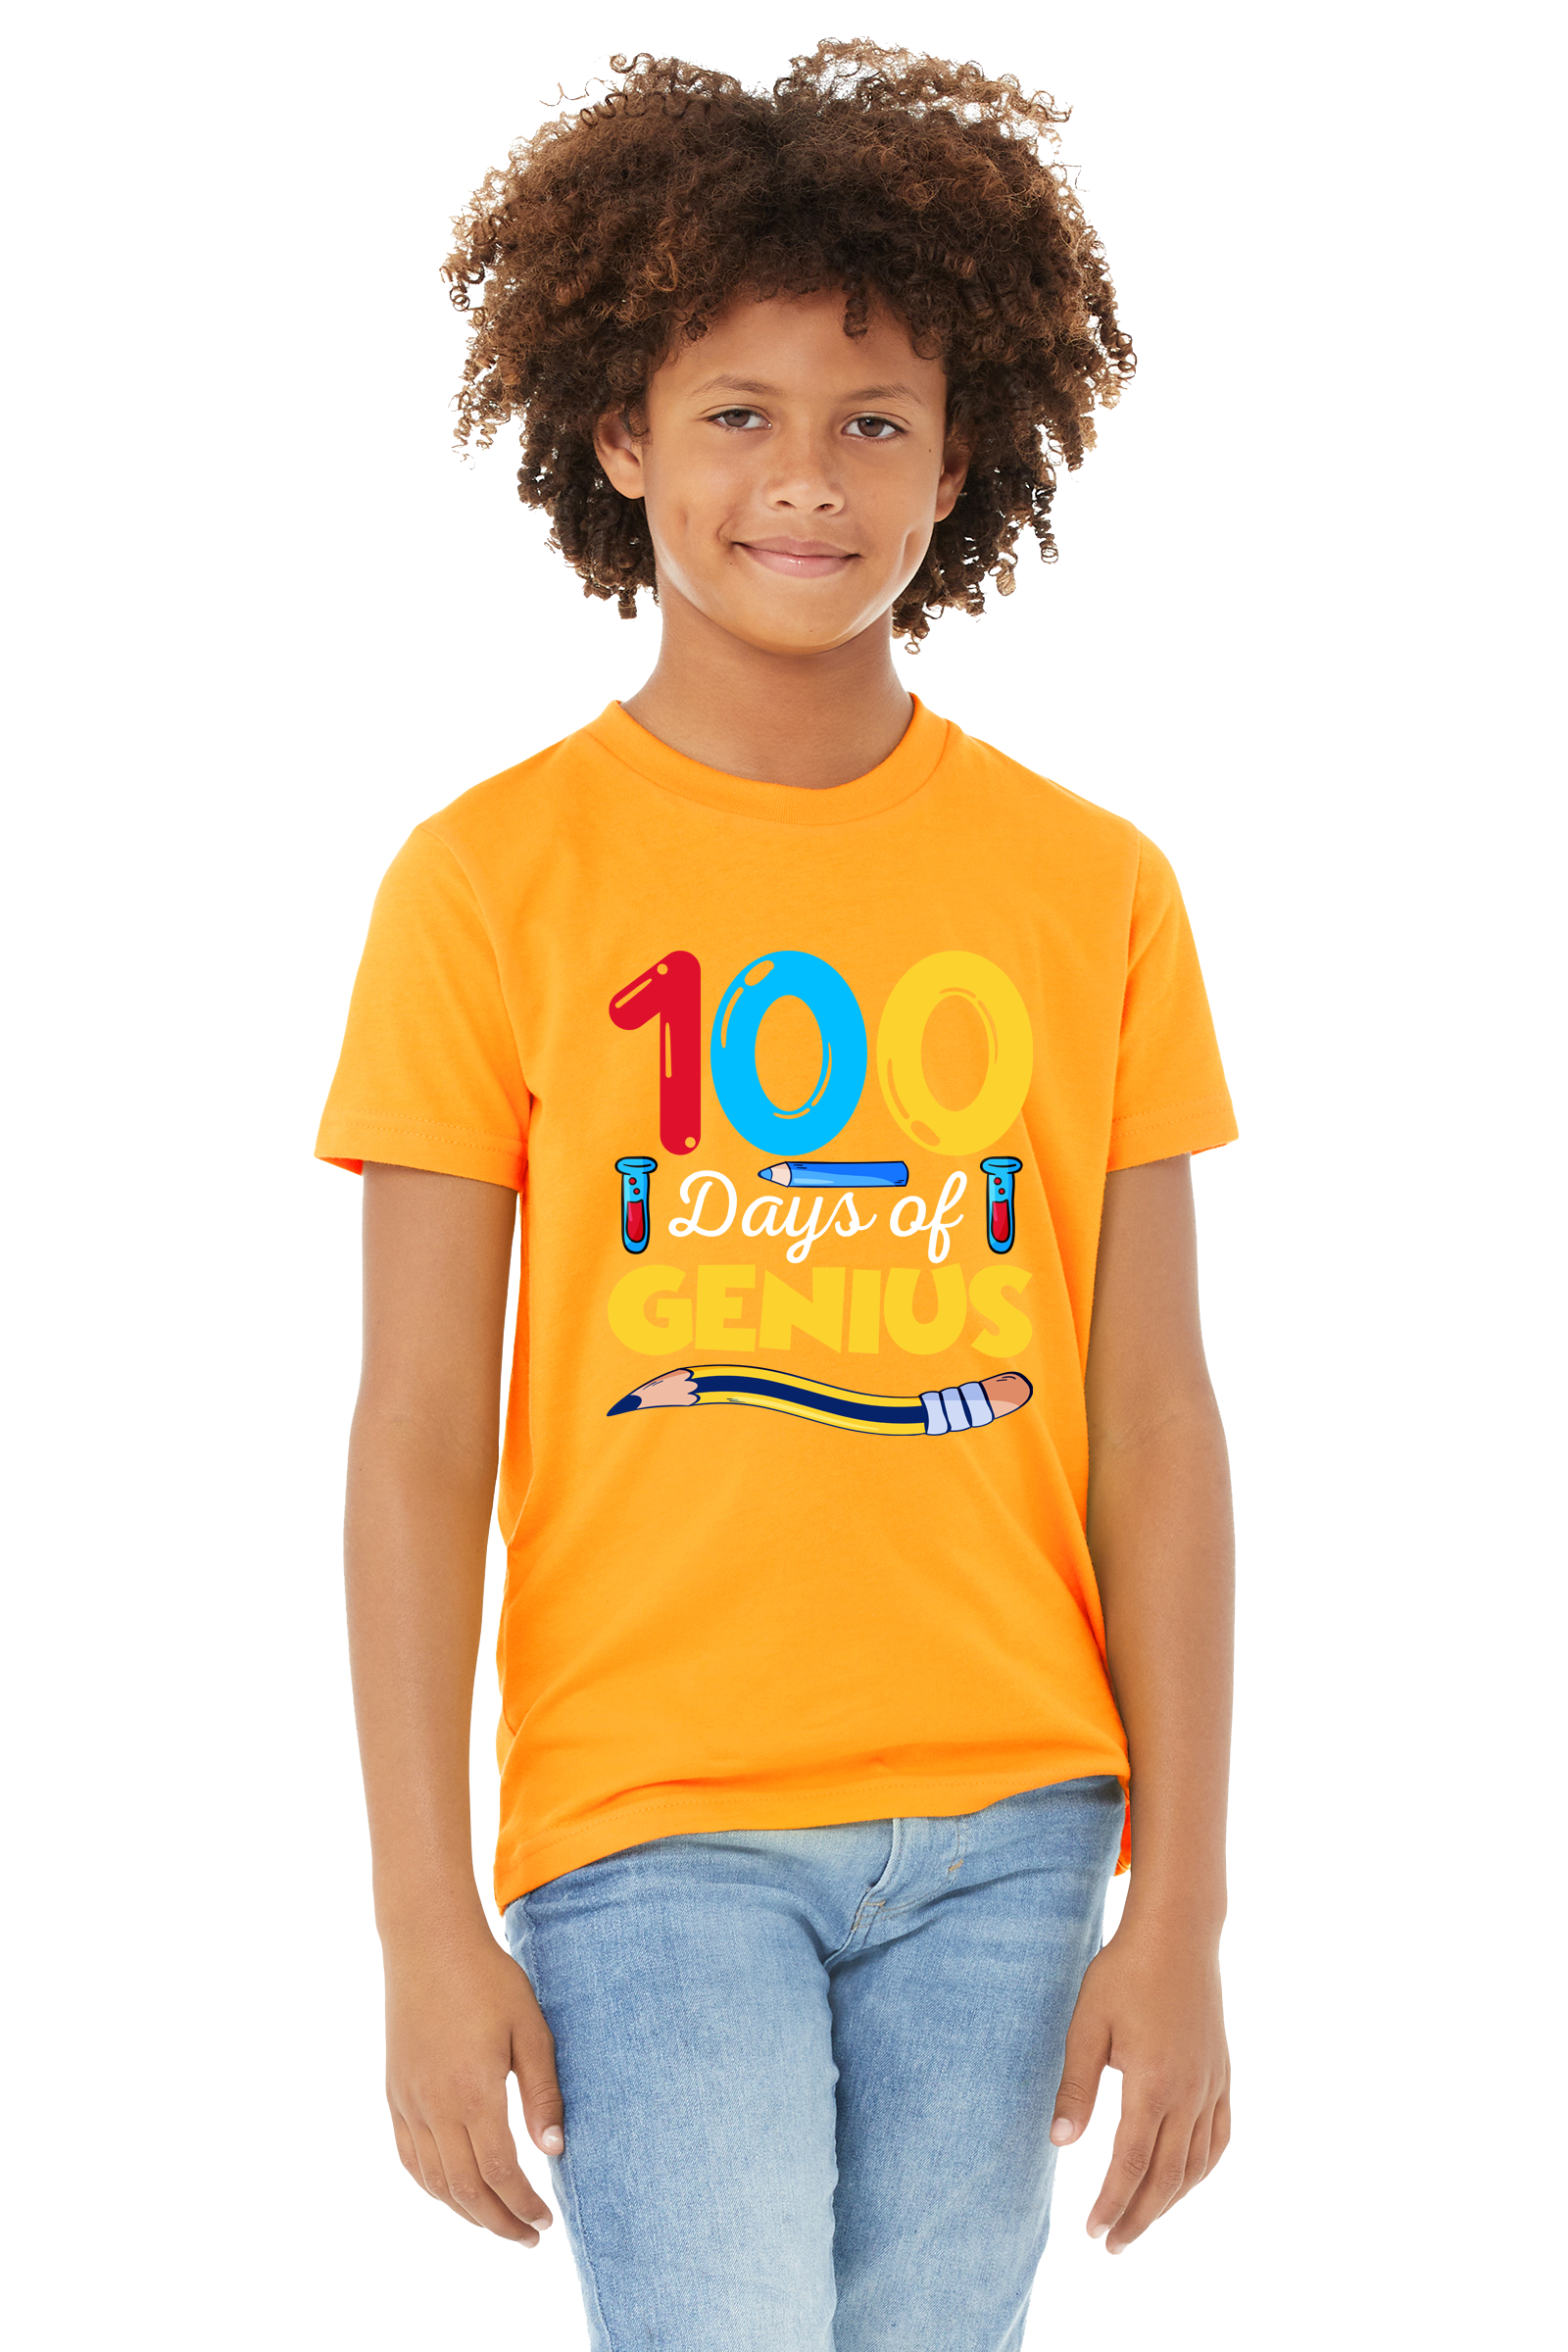 100 Days Of Genius Unisex Youth T-Shirt